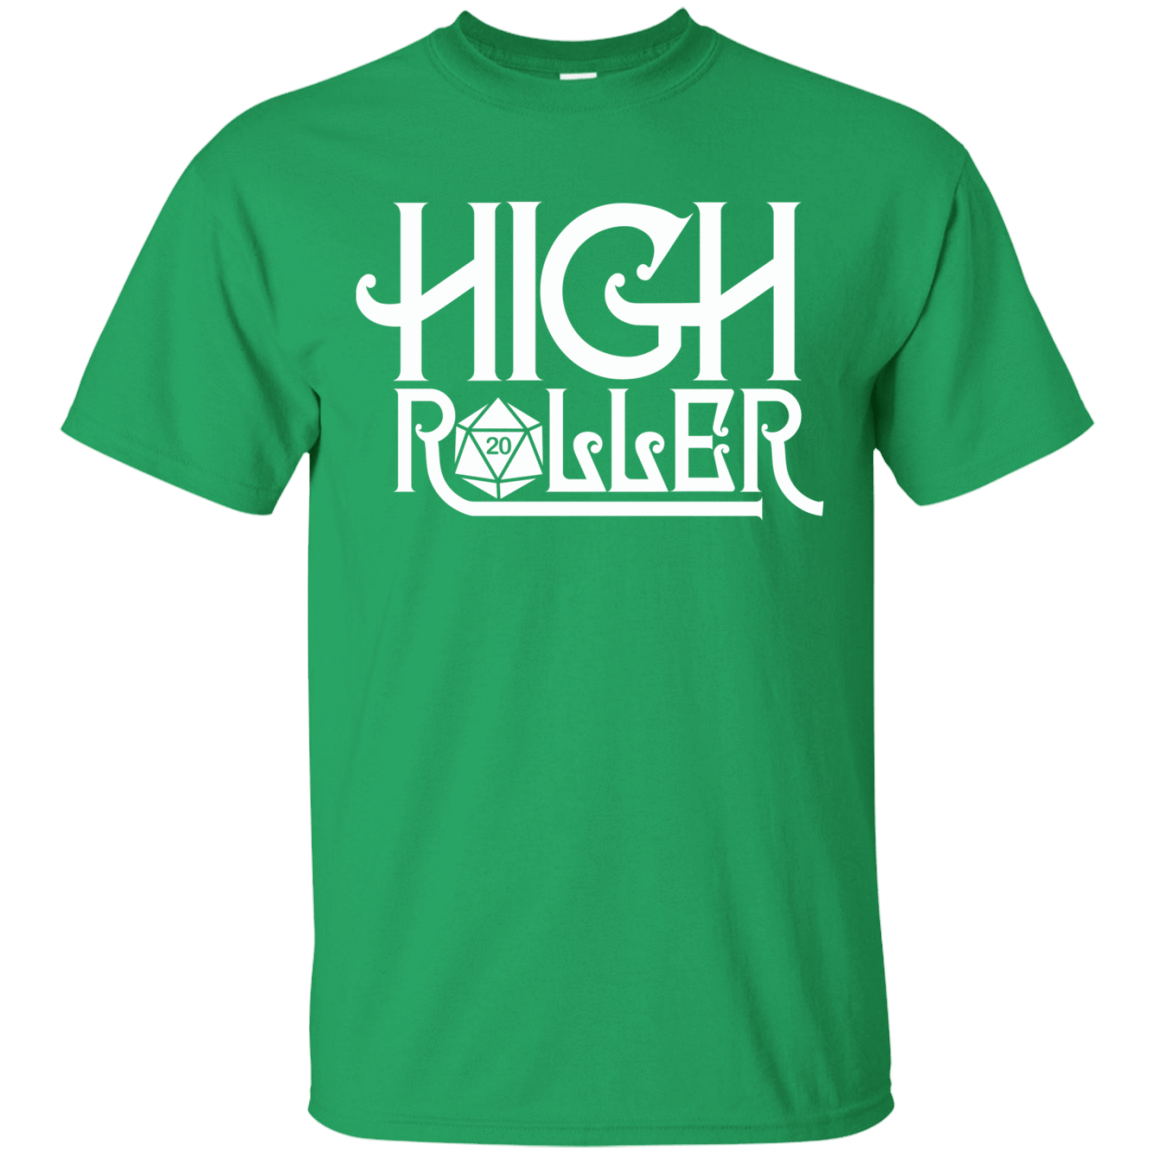 T-Shirts Irish Green / Small High Roller T-Shirt